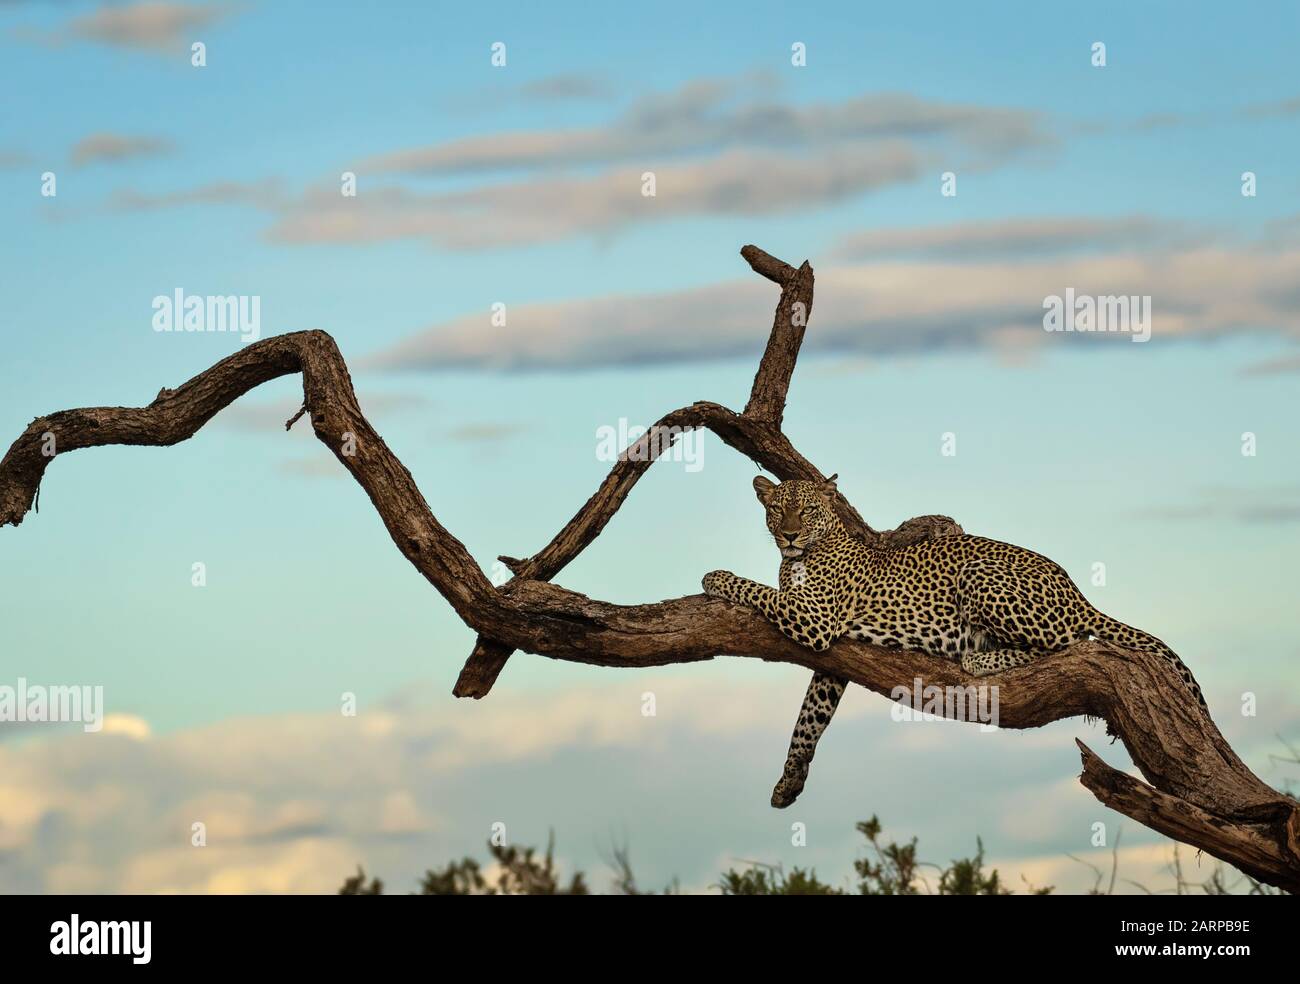 Leopard in Tree, Samburu National Reserve, Kenia Stockfoto